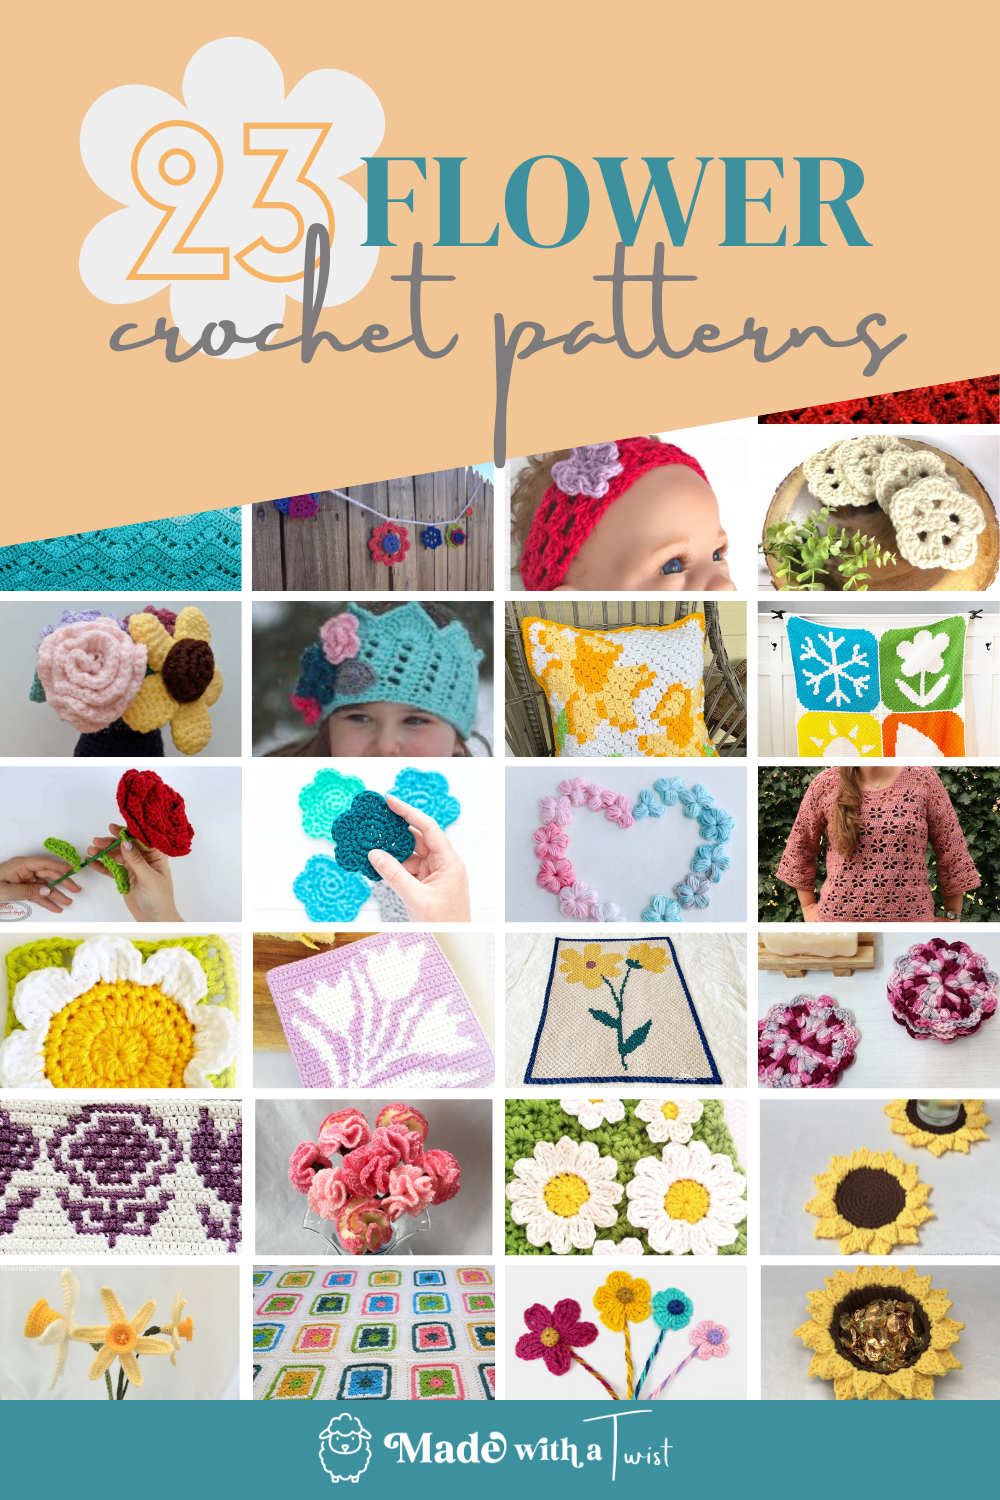 23 Crochet Flower Patterns